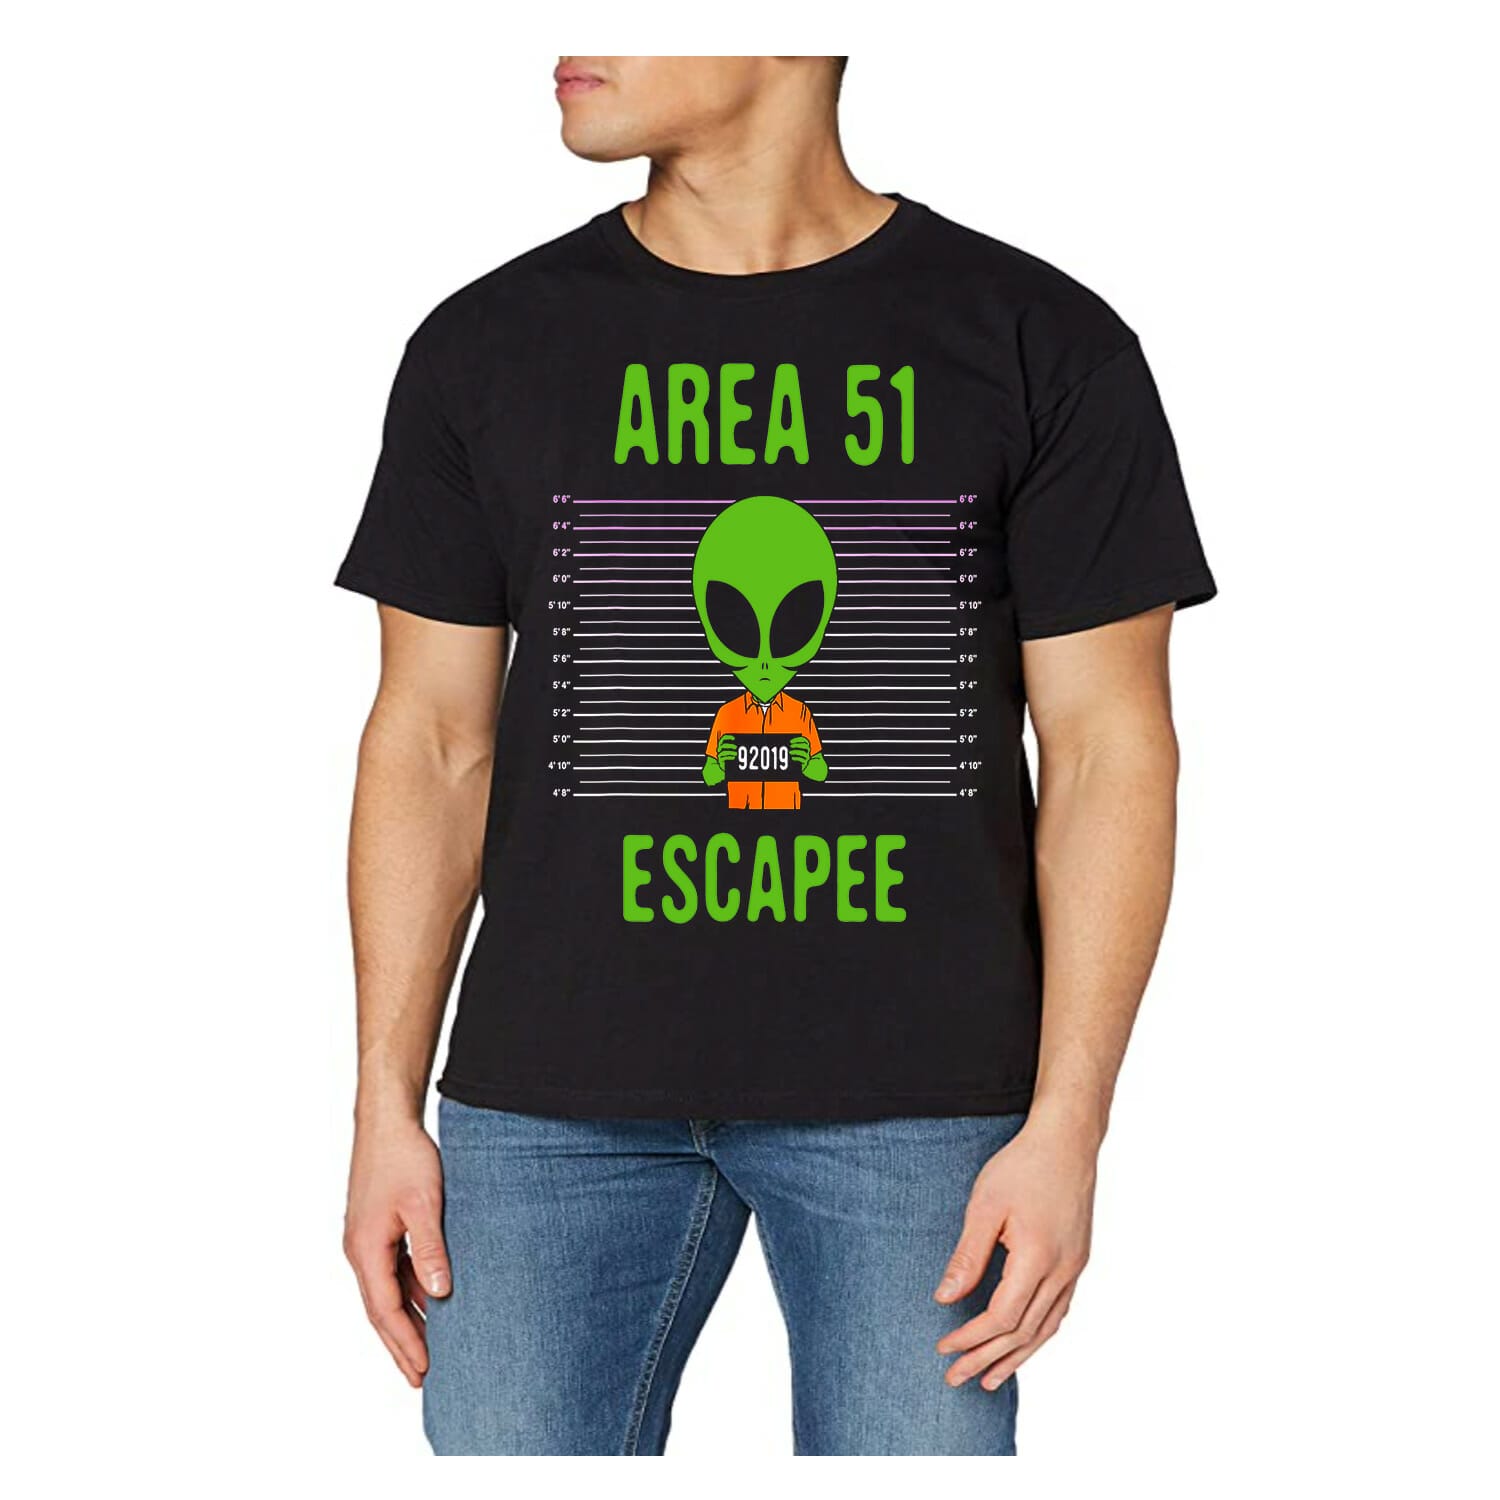 Area 51 escapee funny alien tshirt design